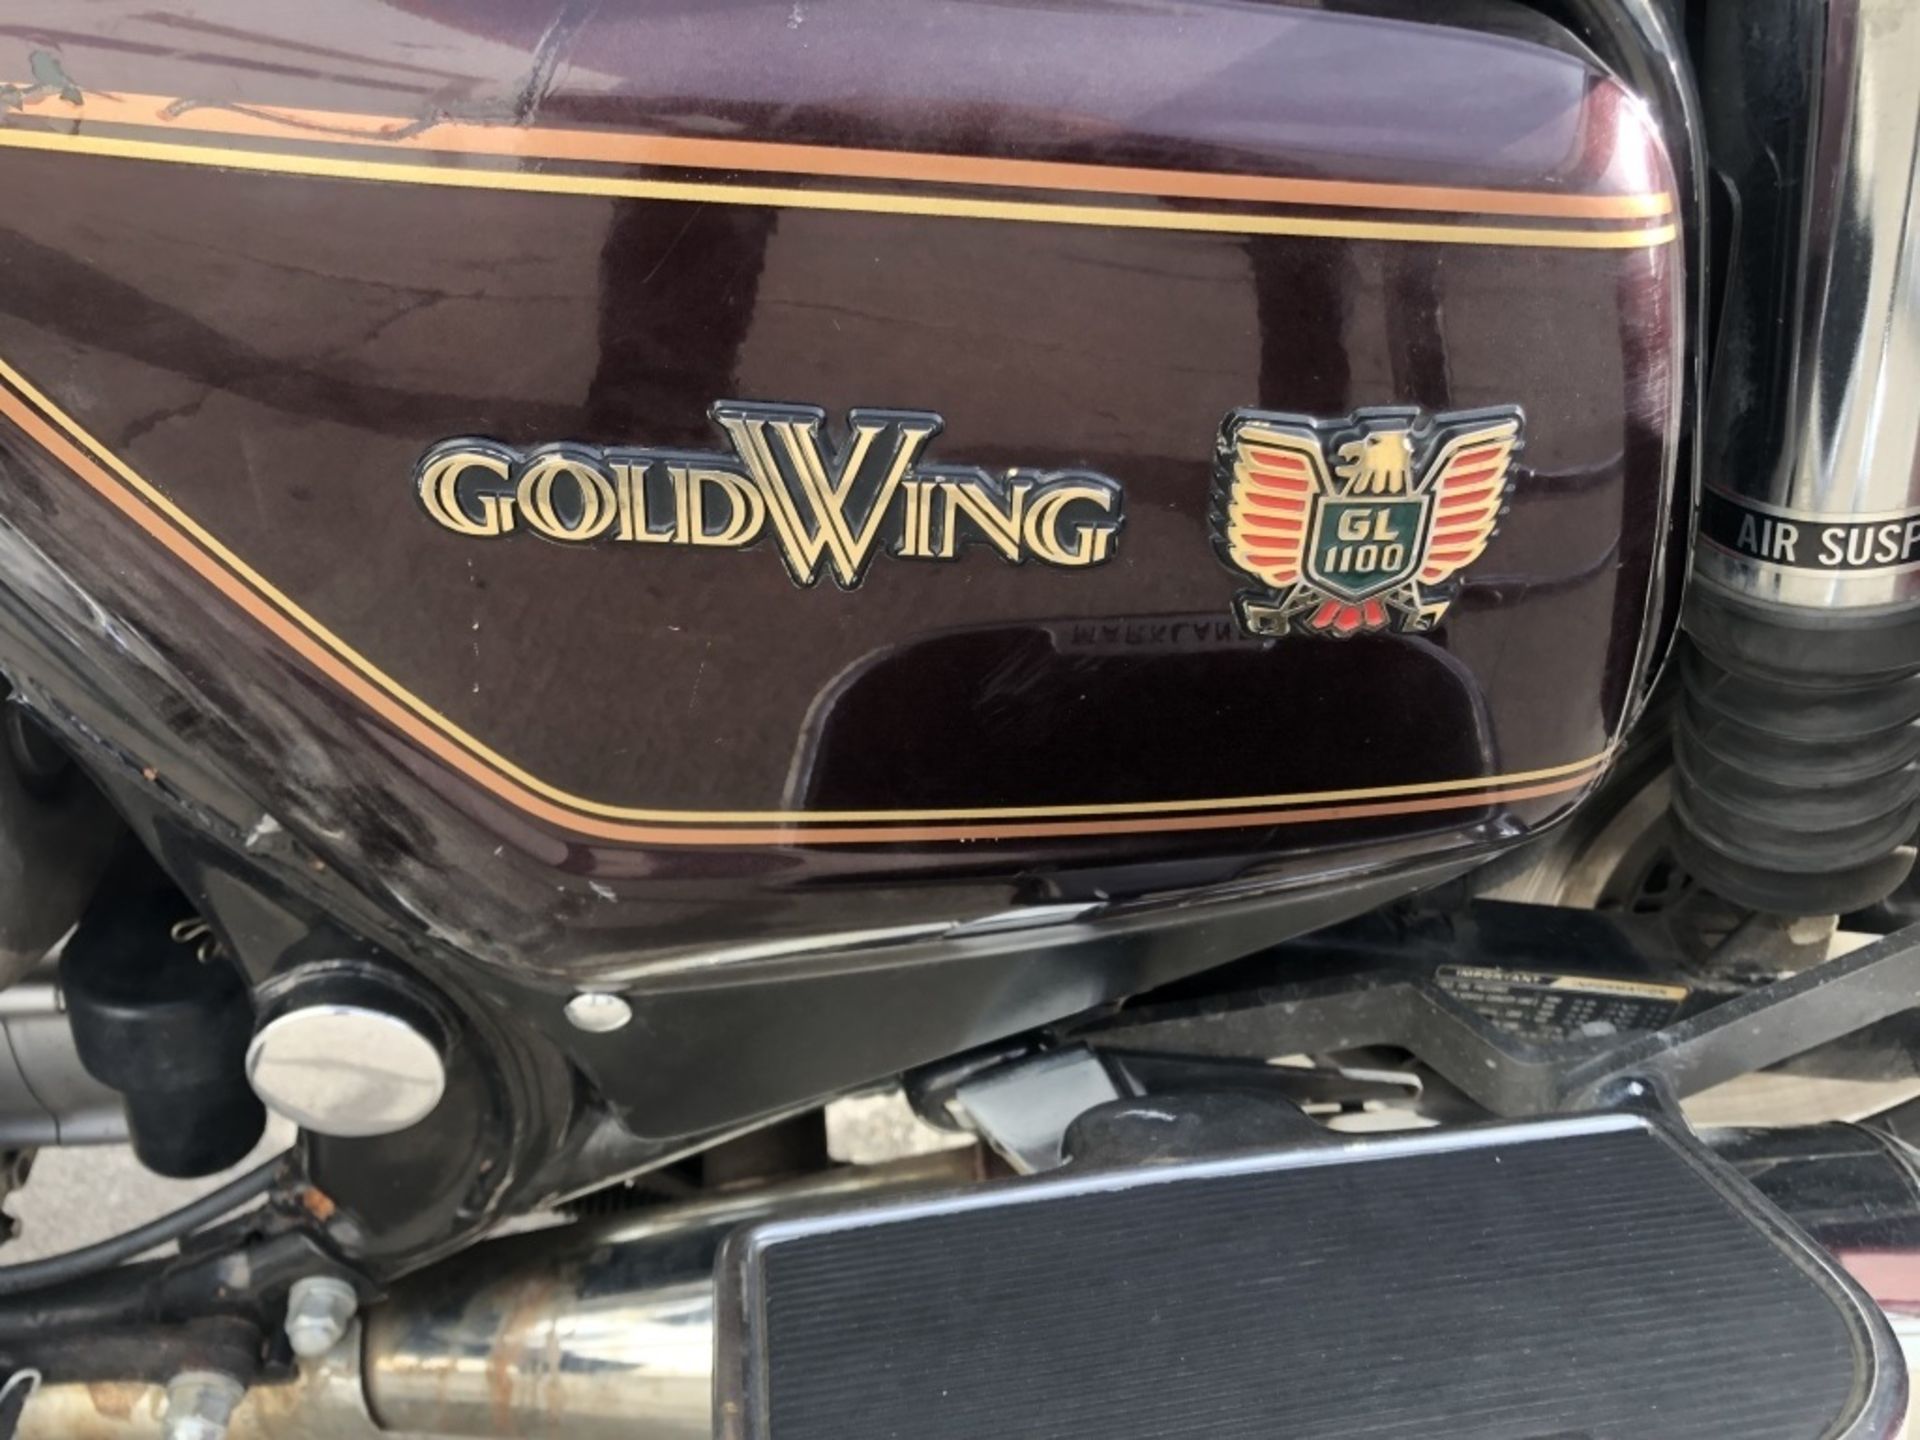 1981 Honda Goldwing GL1100 Motorcycle - Image 18 of 29